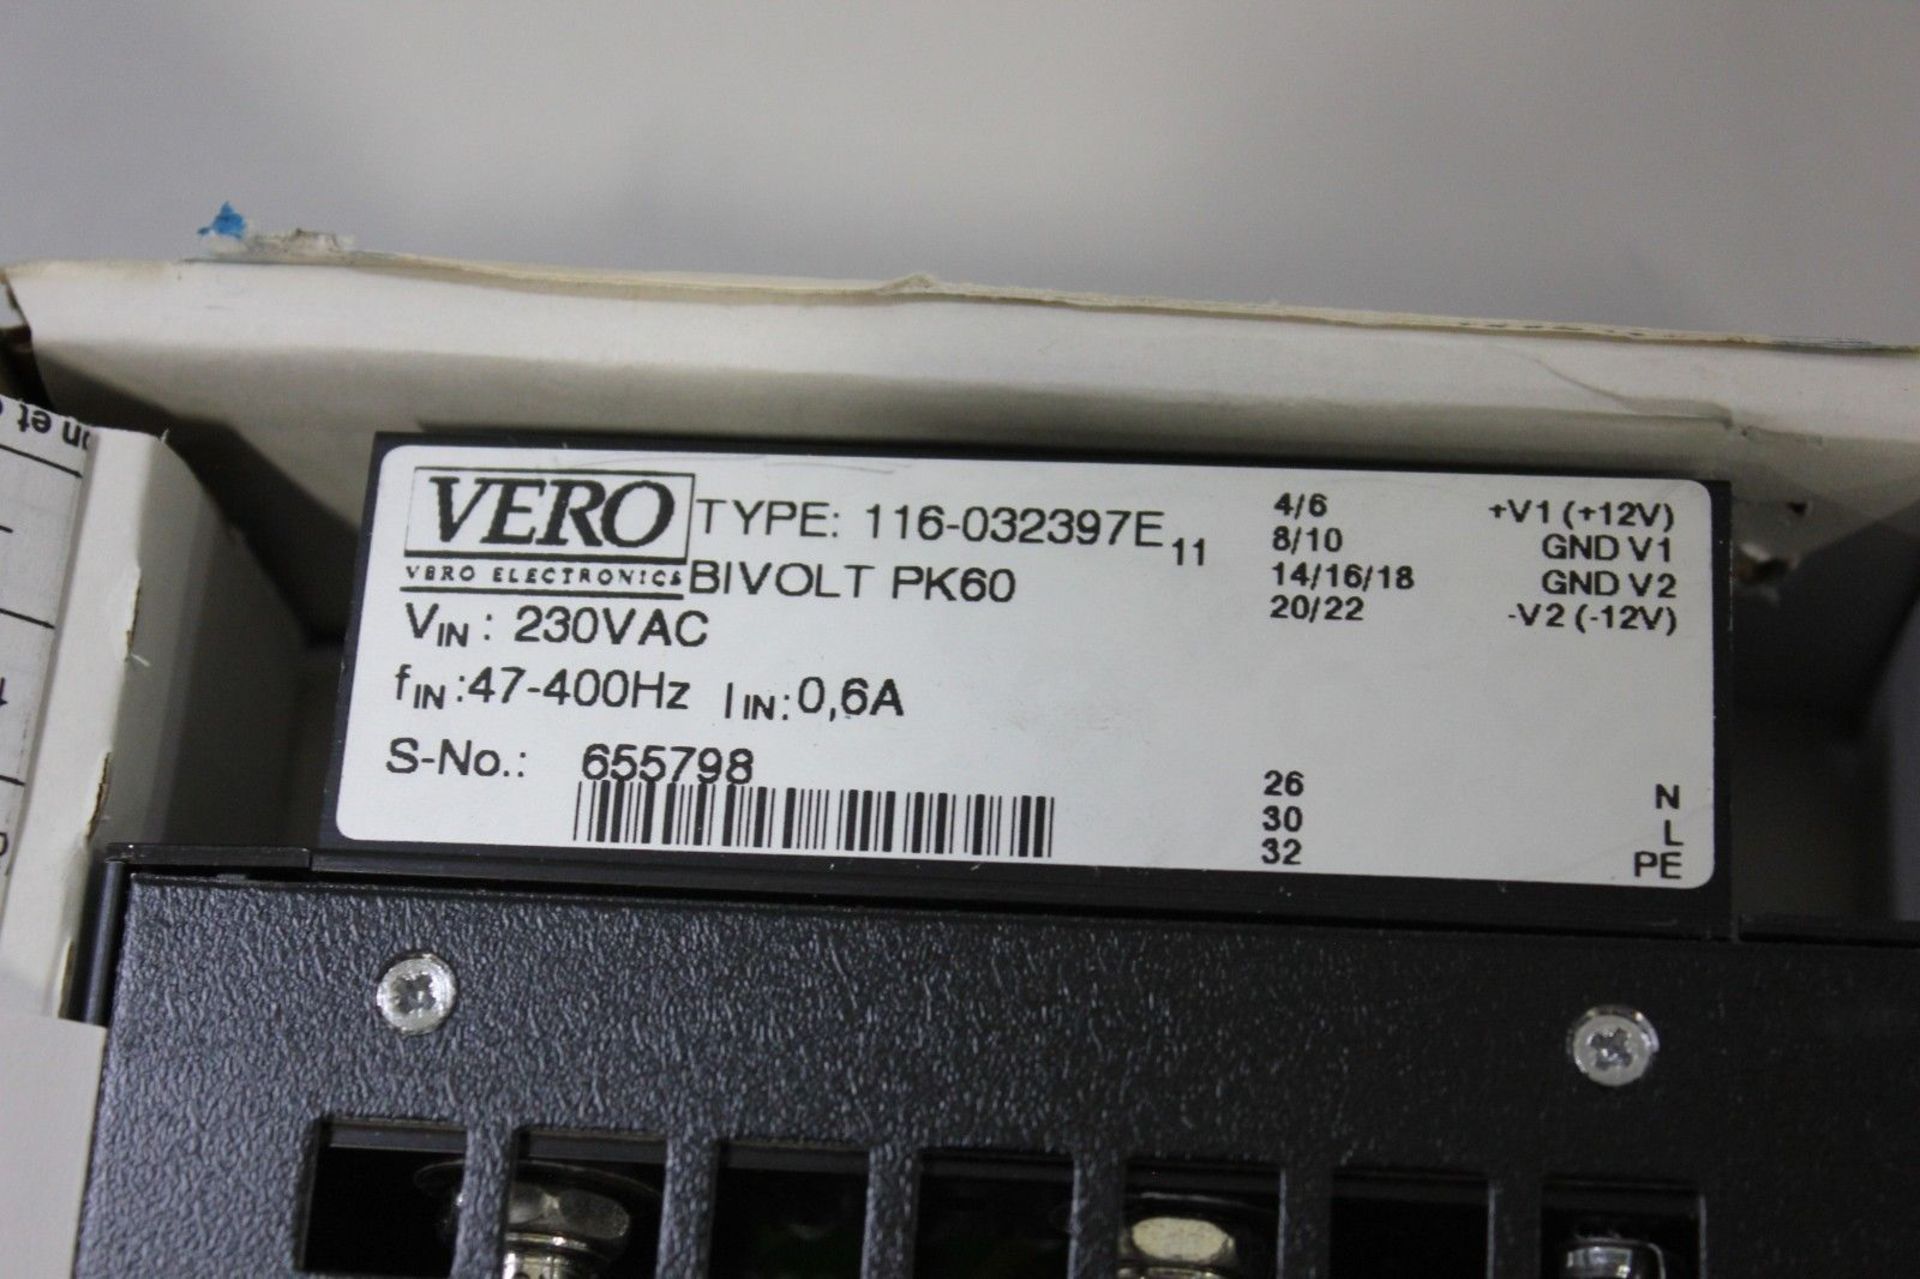 New Vero Bivolt PK60 Power Supply - Image 2 of 2